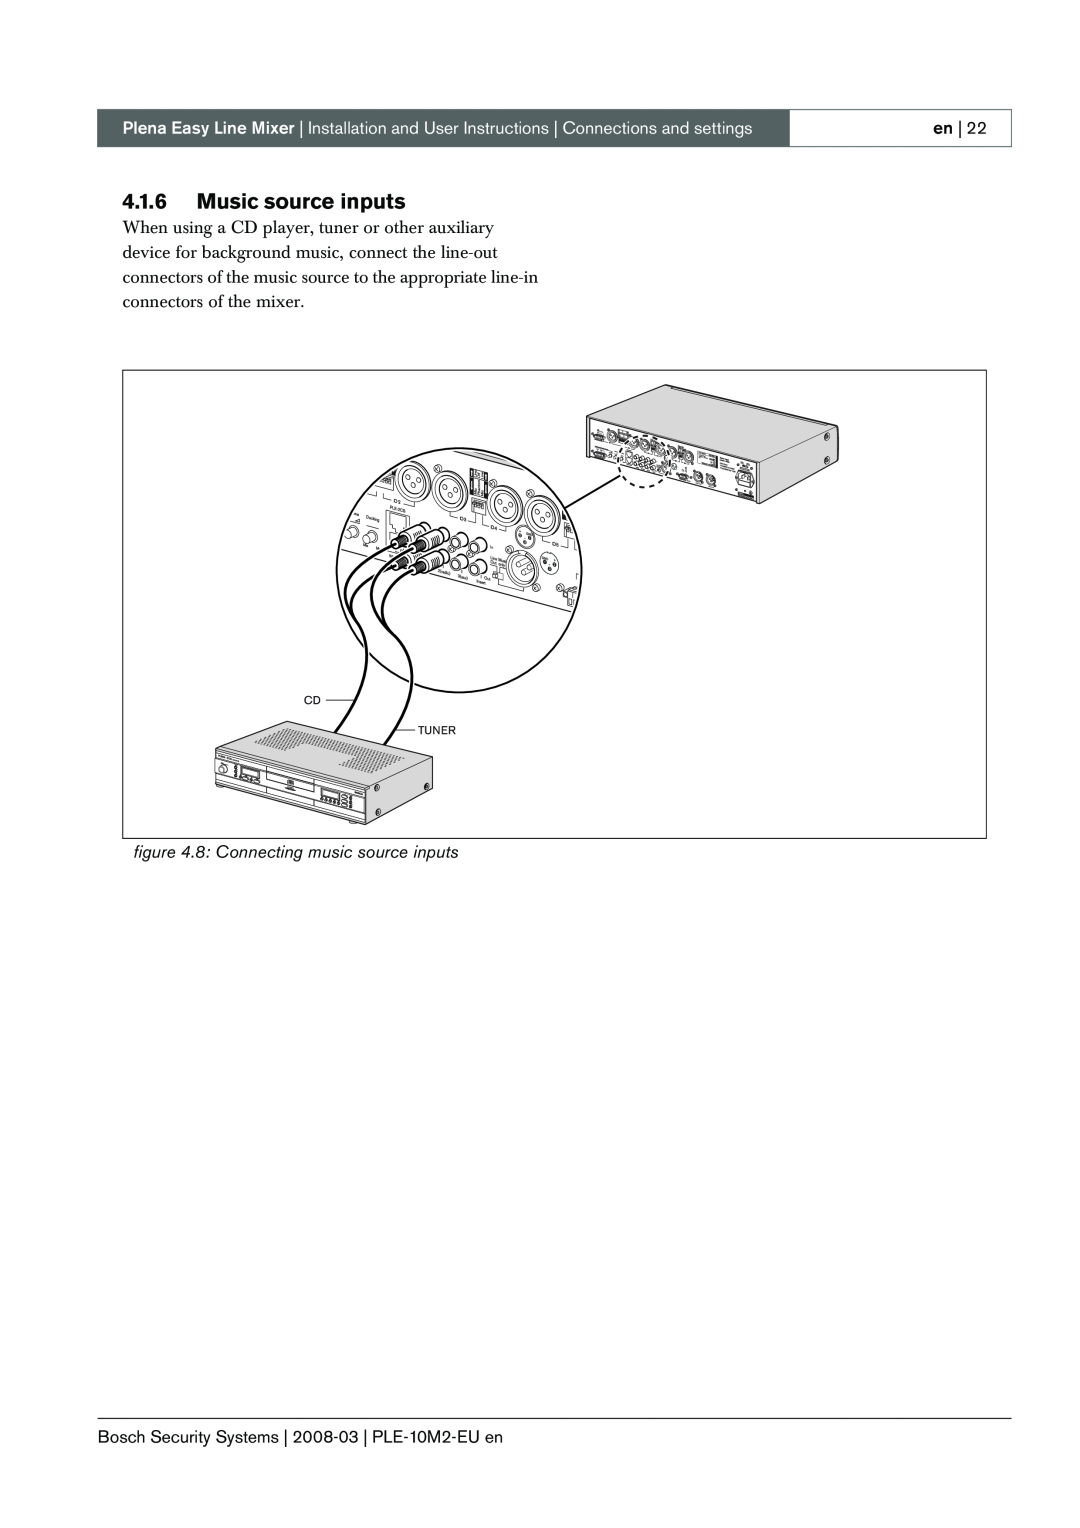 Bosch Appliances PLE-10M2-EU manual 4.1.6Music source inputs, 8 Connecting music source inputs 